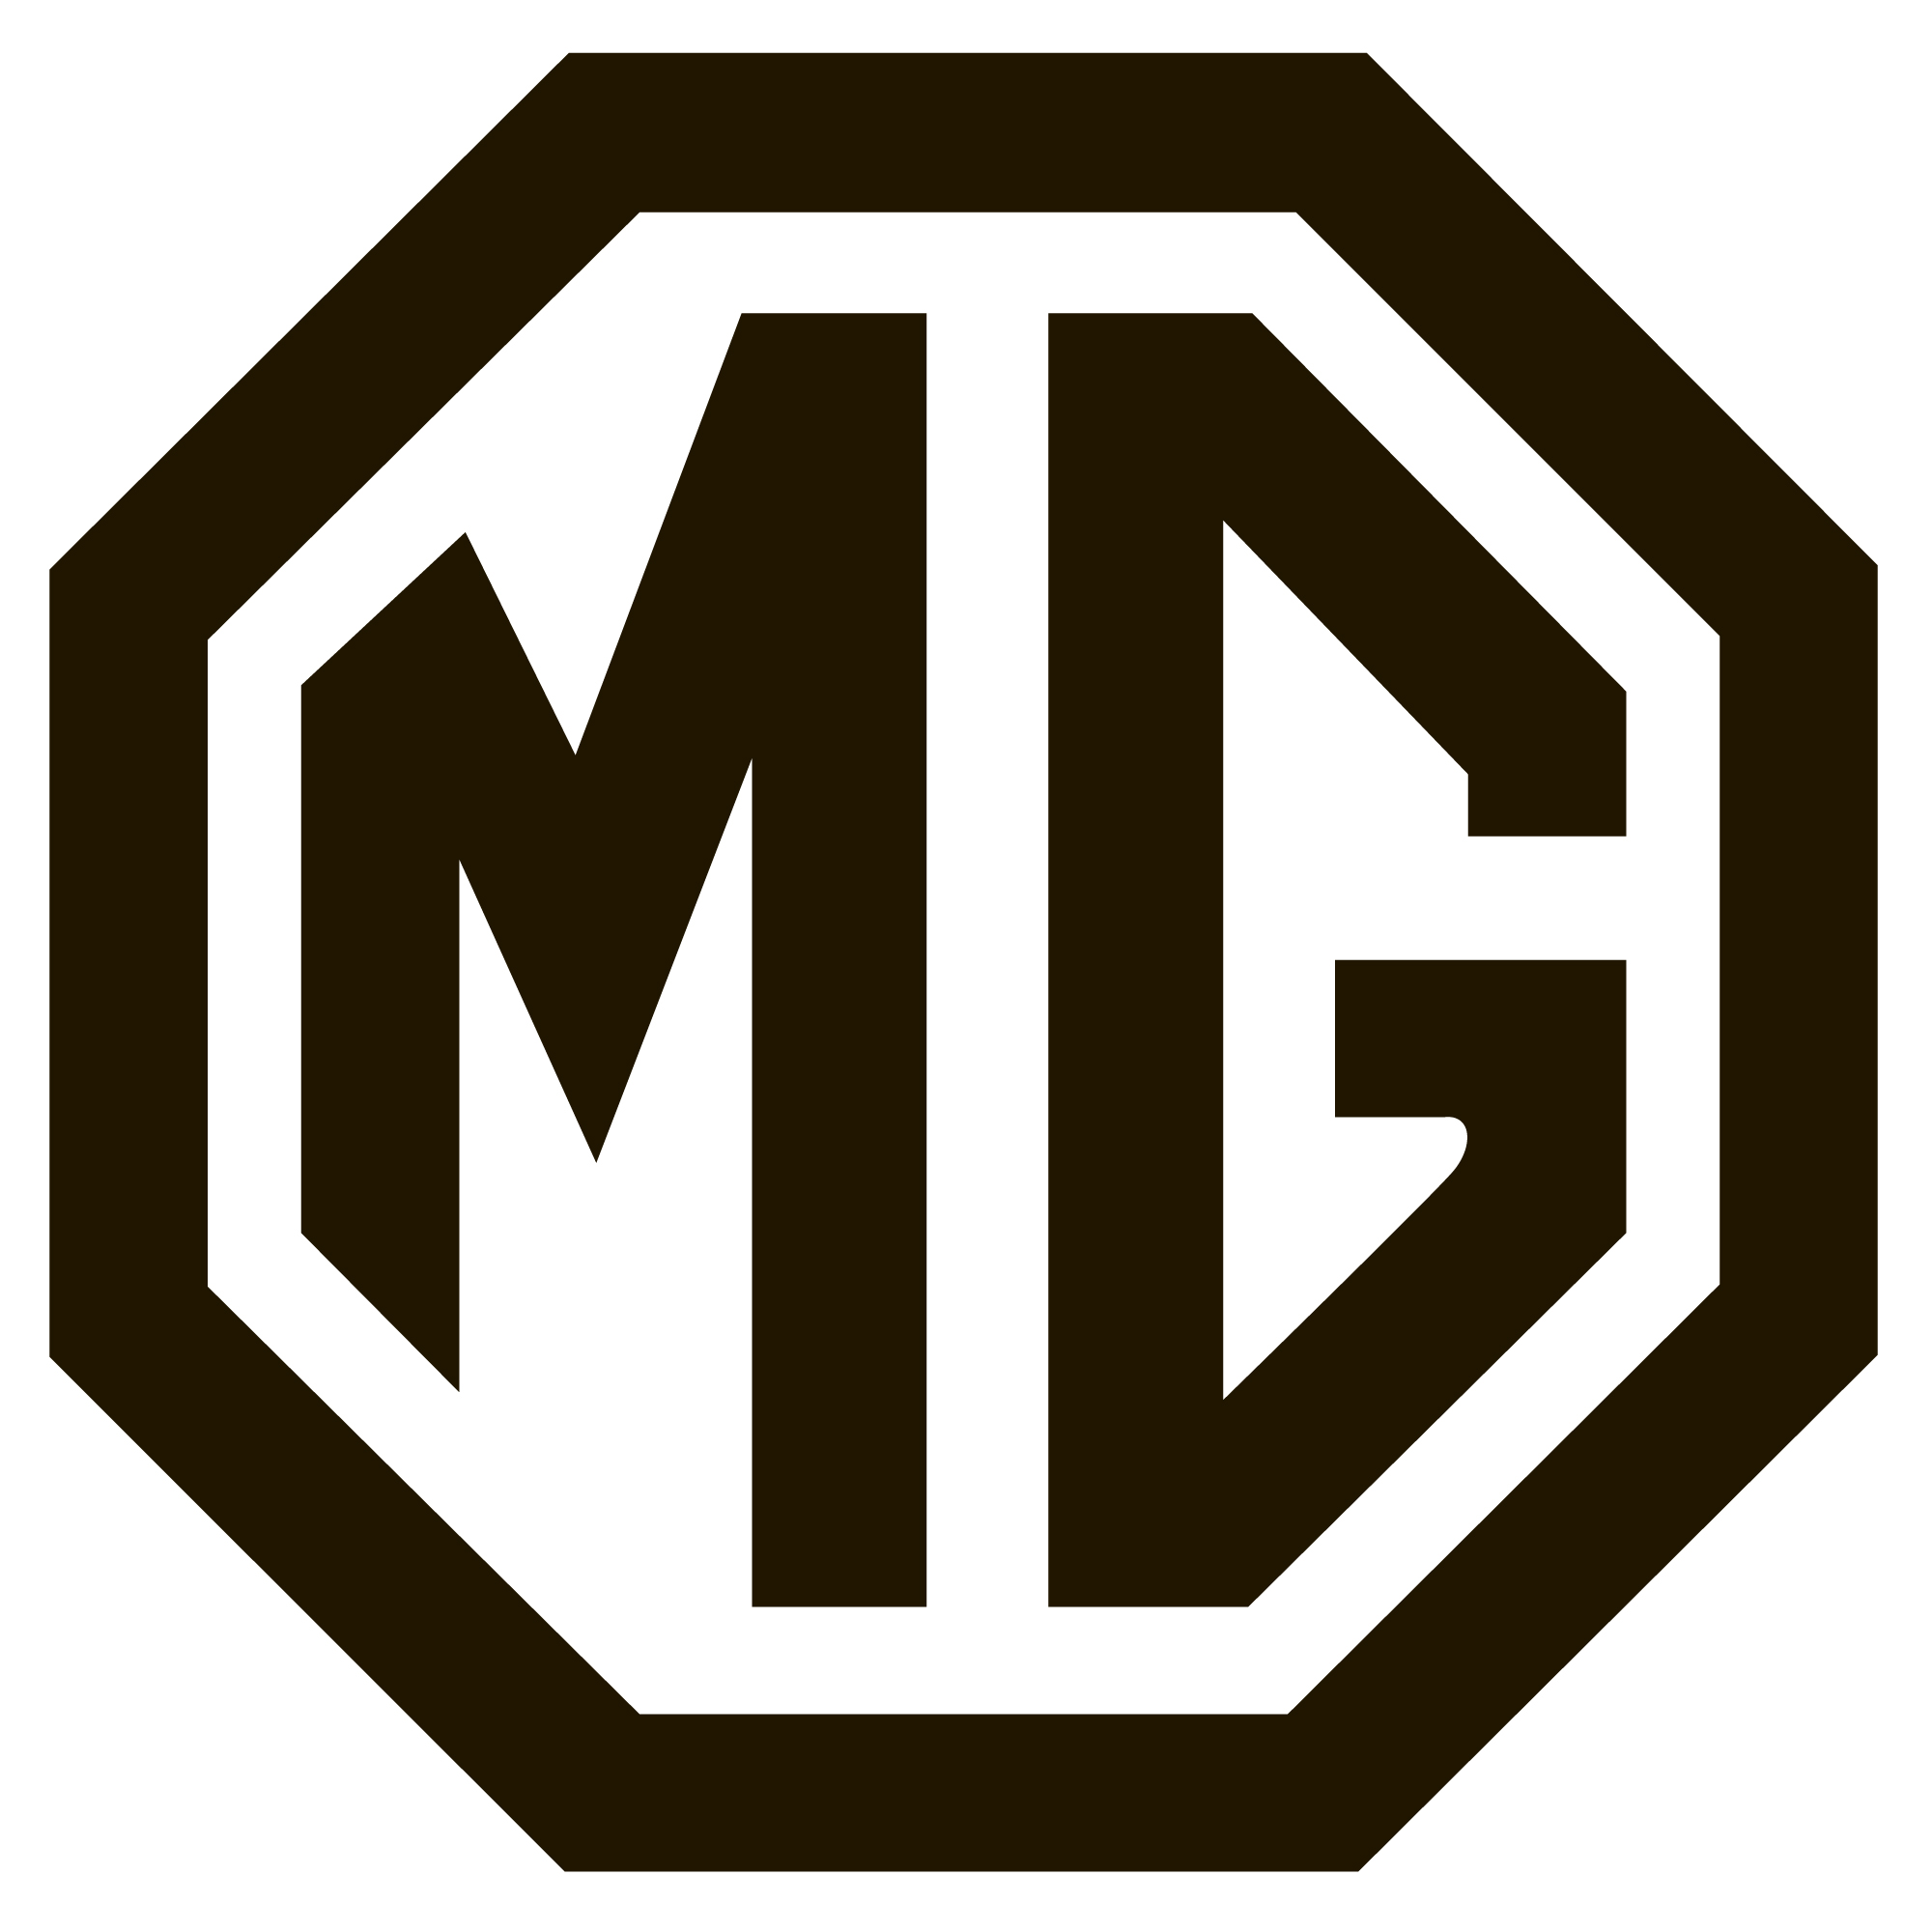 Groupe Cavallari Concessionnaire MG Motor